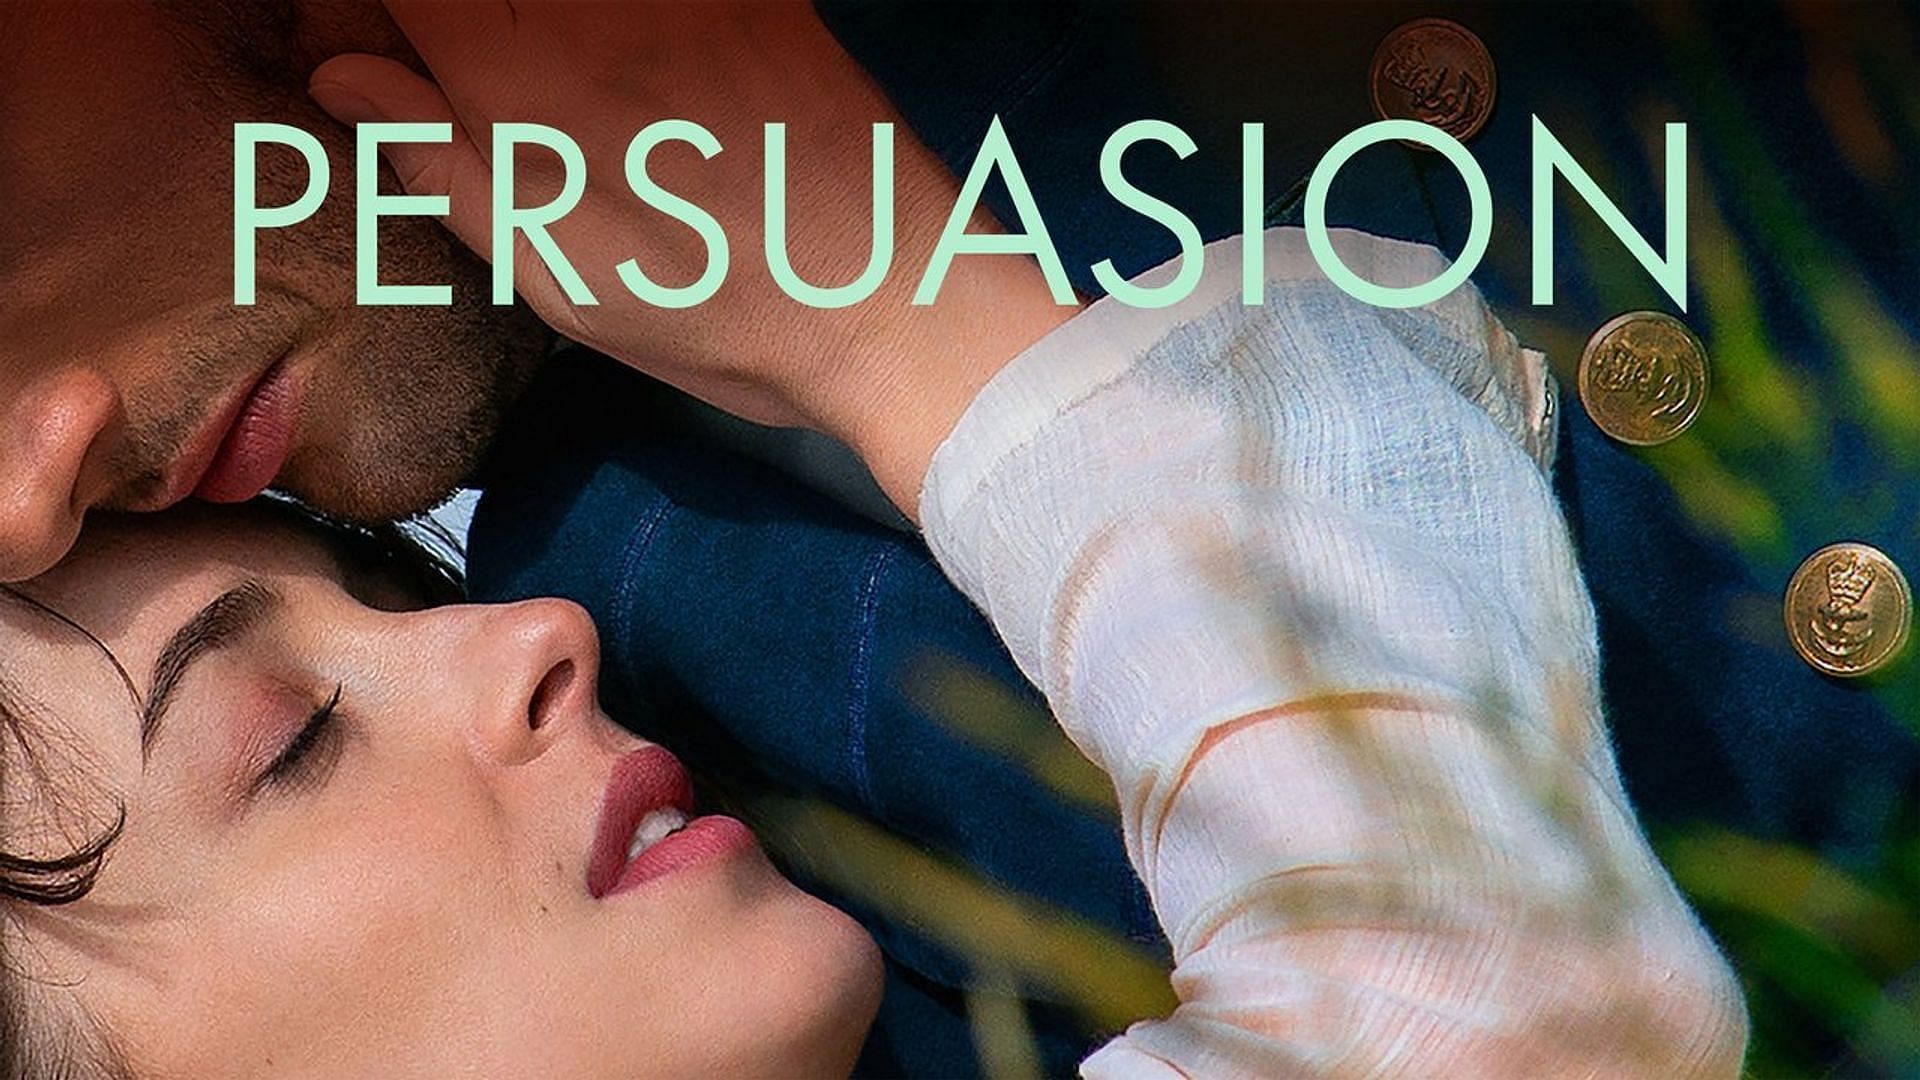 Persuasion (Image via Netflix)